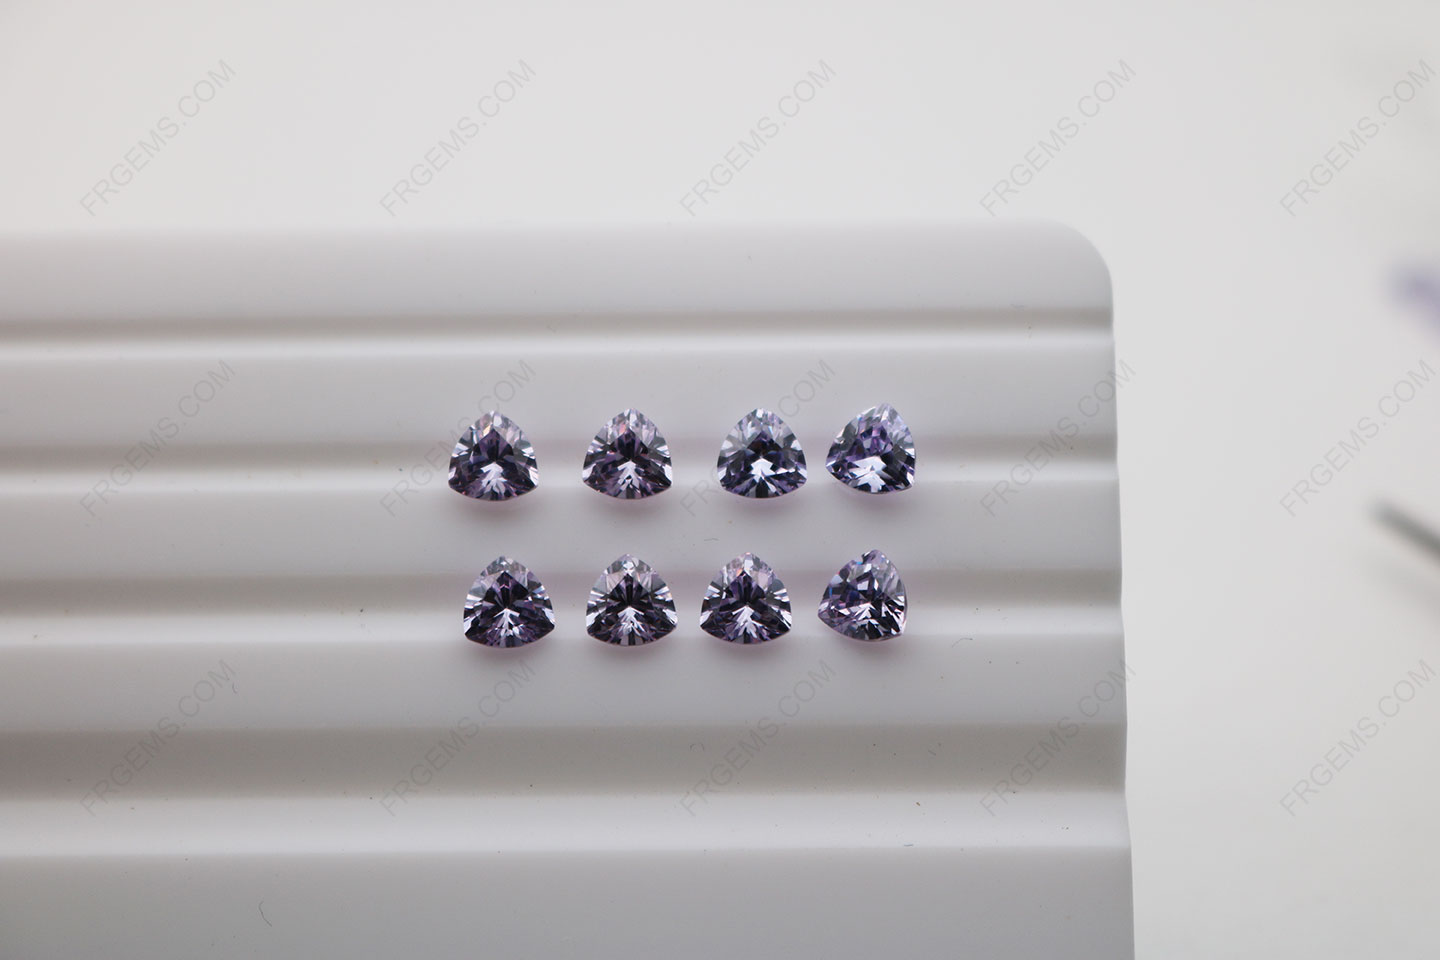 Cubic_Zirconia_Lavender_Trillion_Shape_Diamond_faceted_cut_5x5mm_stones_IMG_4886